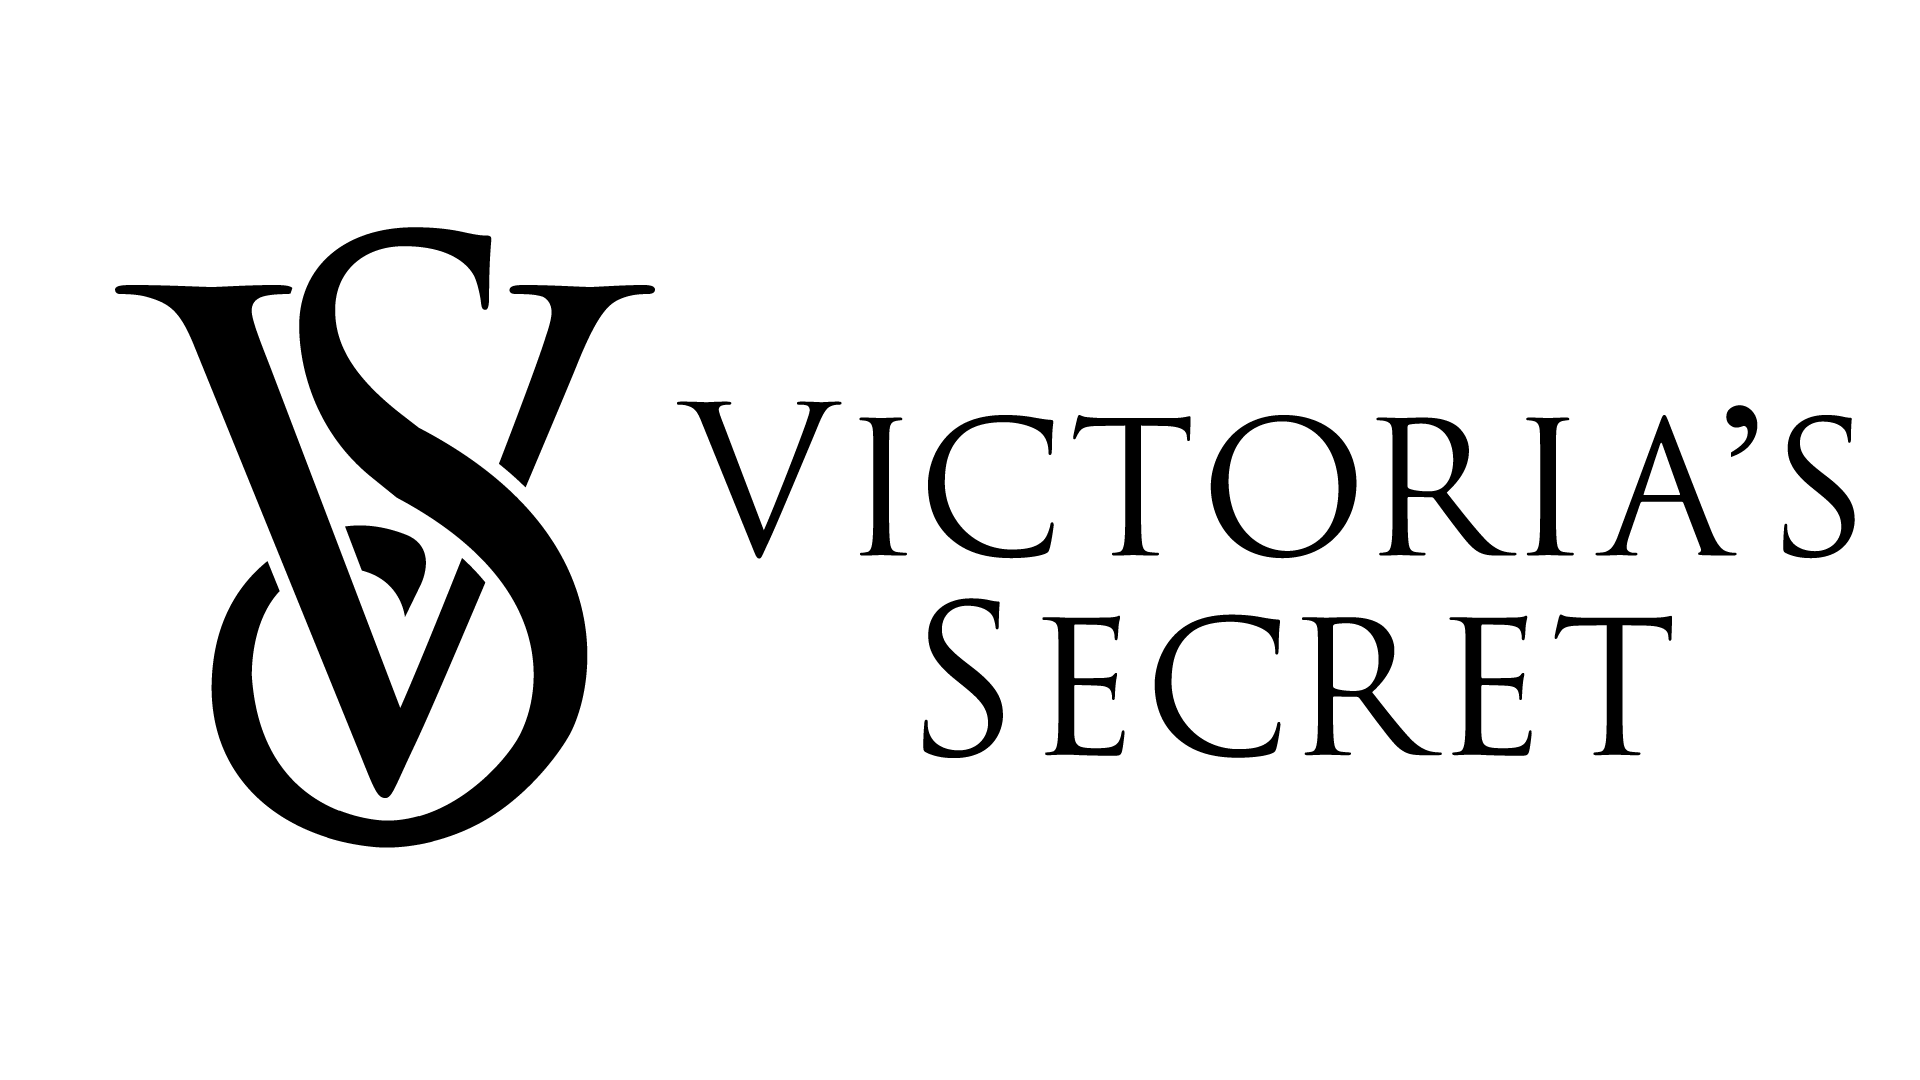 The Victoria's Secret Logo - Victoria Secret Logo, Victoria Secret Symbol, History and Evolution